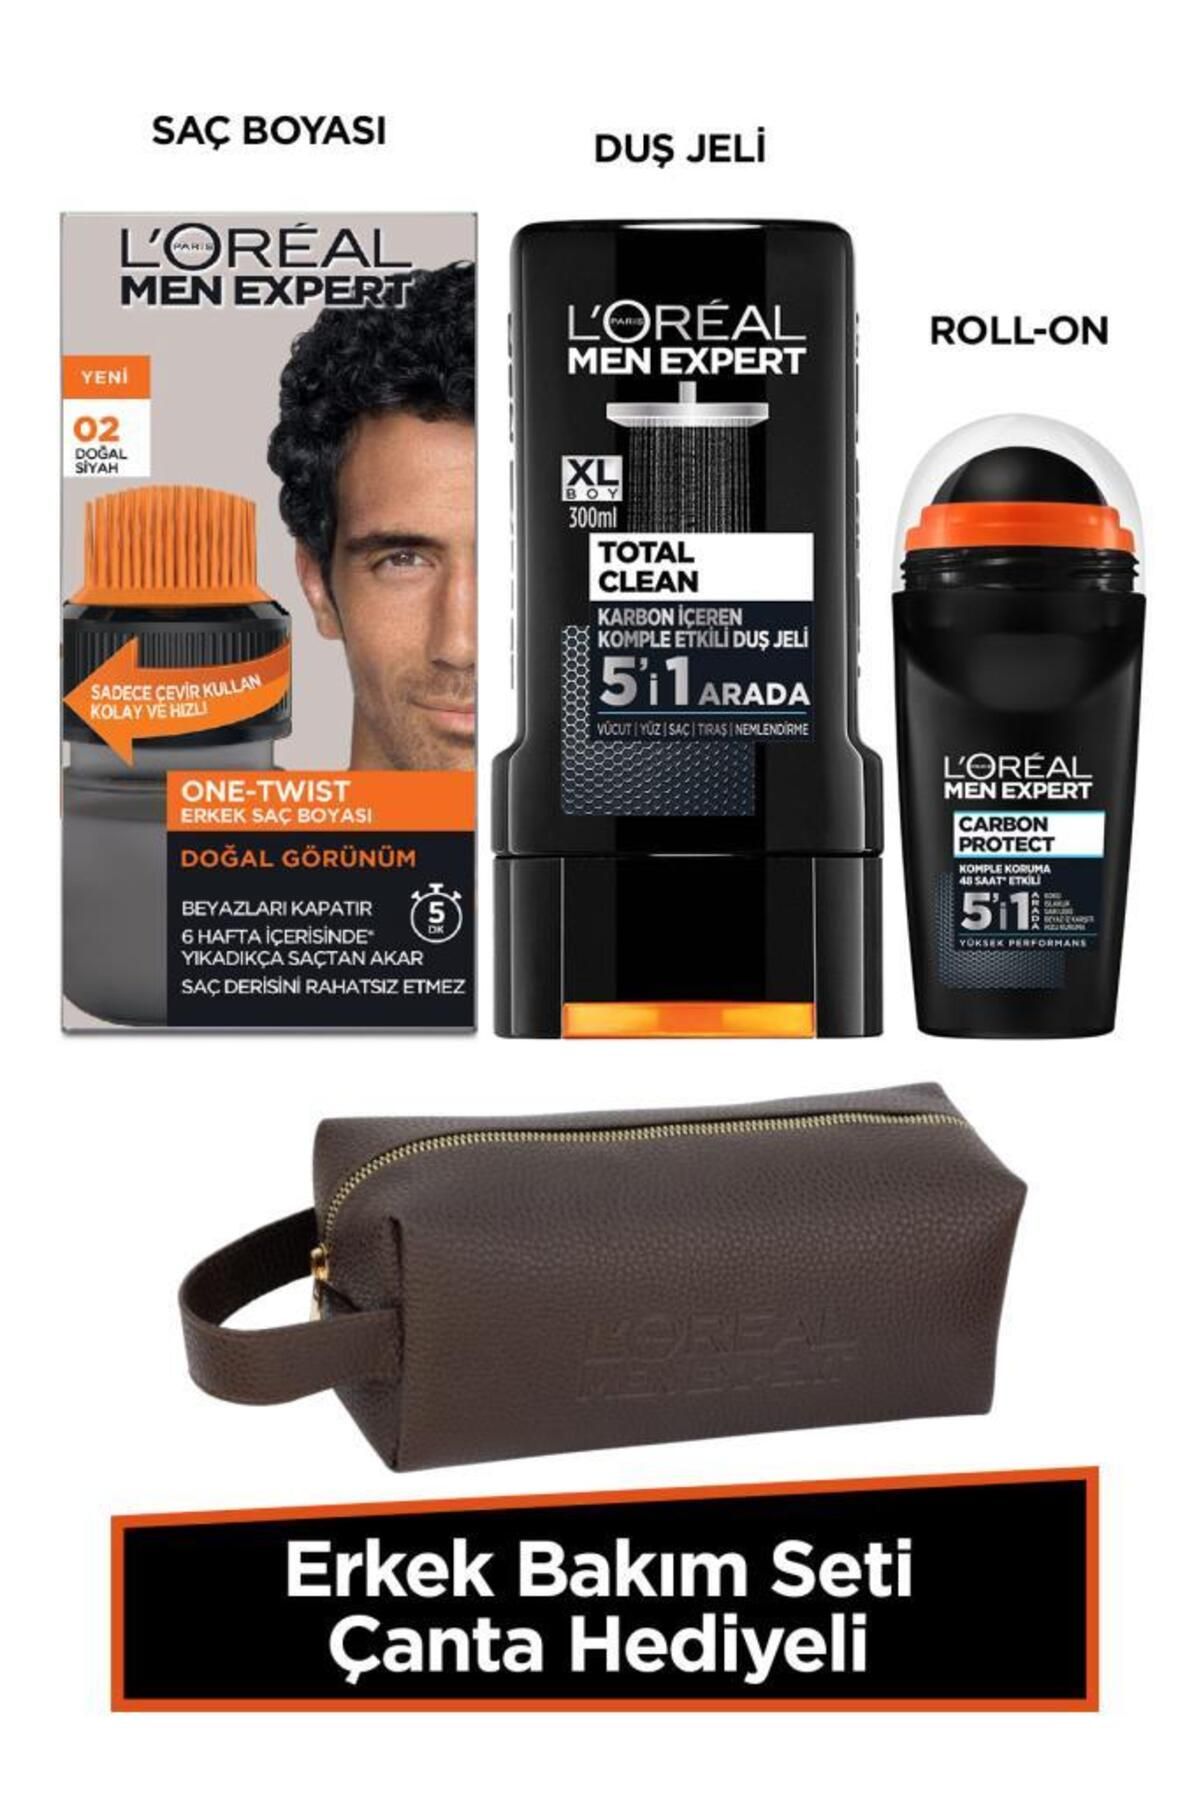 L'Oreal Paris Men Expert Erkek Bakım Seti -one Twist Saç Boyası 02 Siyah &carbon Protect Roll-on &total Clean Duş Jeli &çanta